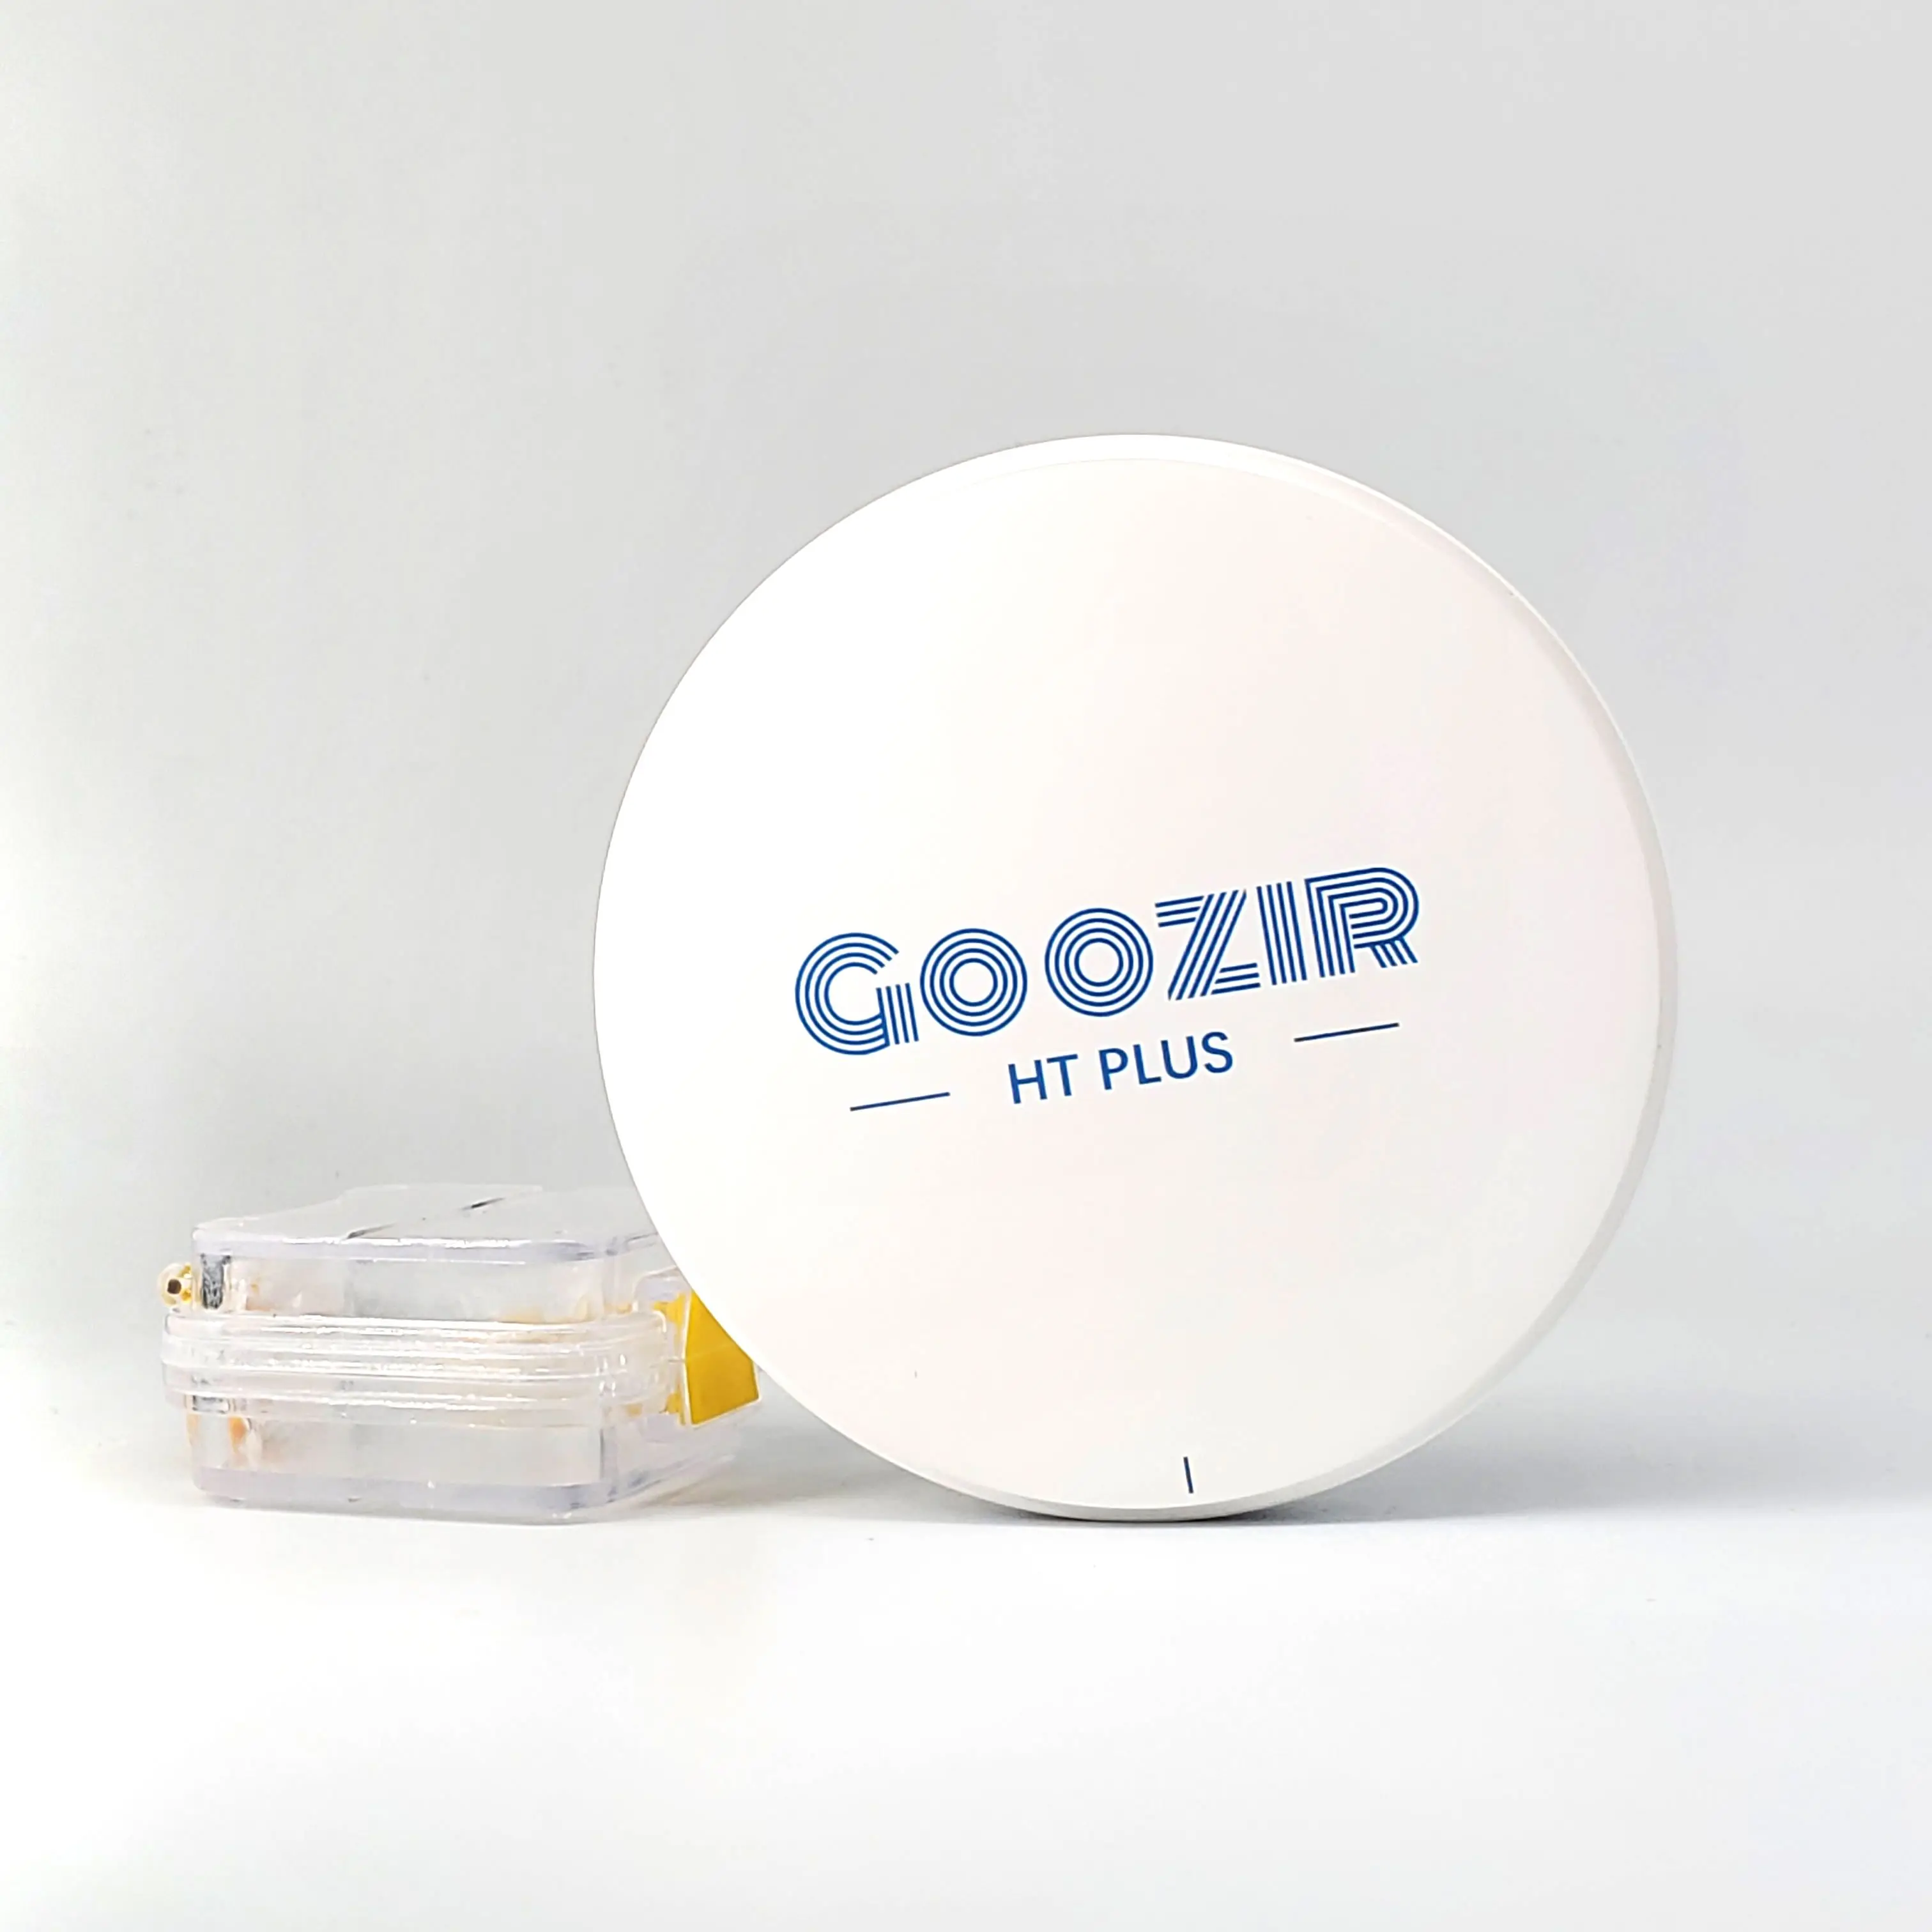 

GOOZIR HT White The Highly Translucent Zirconium Dioxide Highest Aesthetic Demands